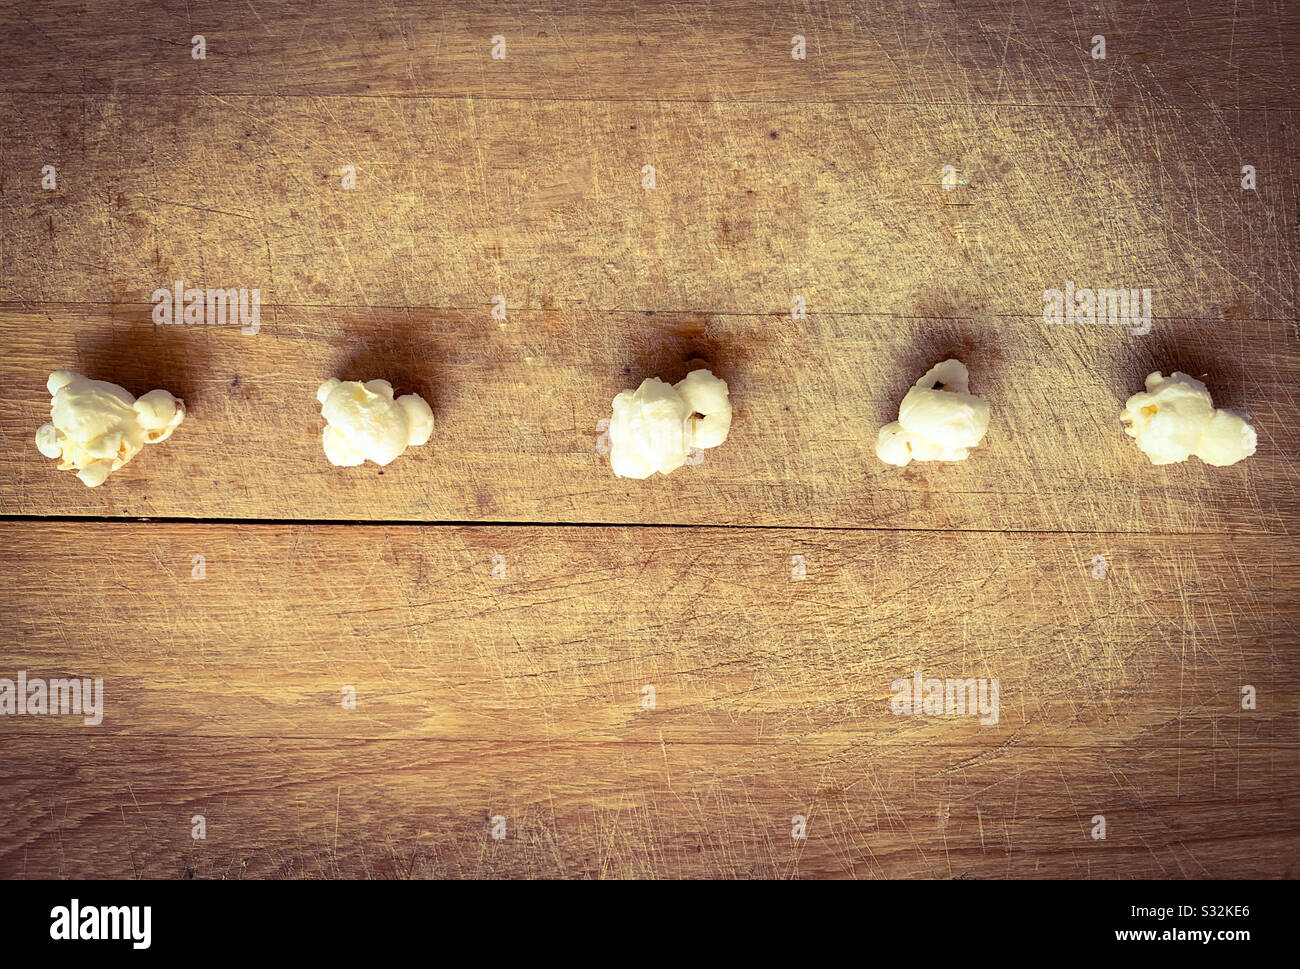 Popcorn on wooden background. Stock Photo